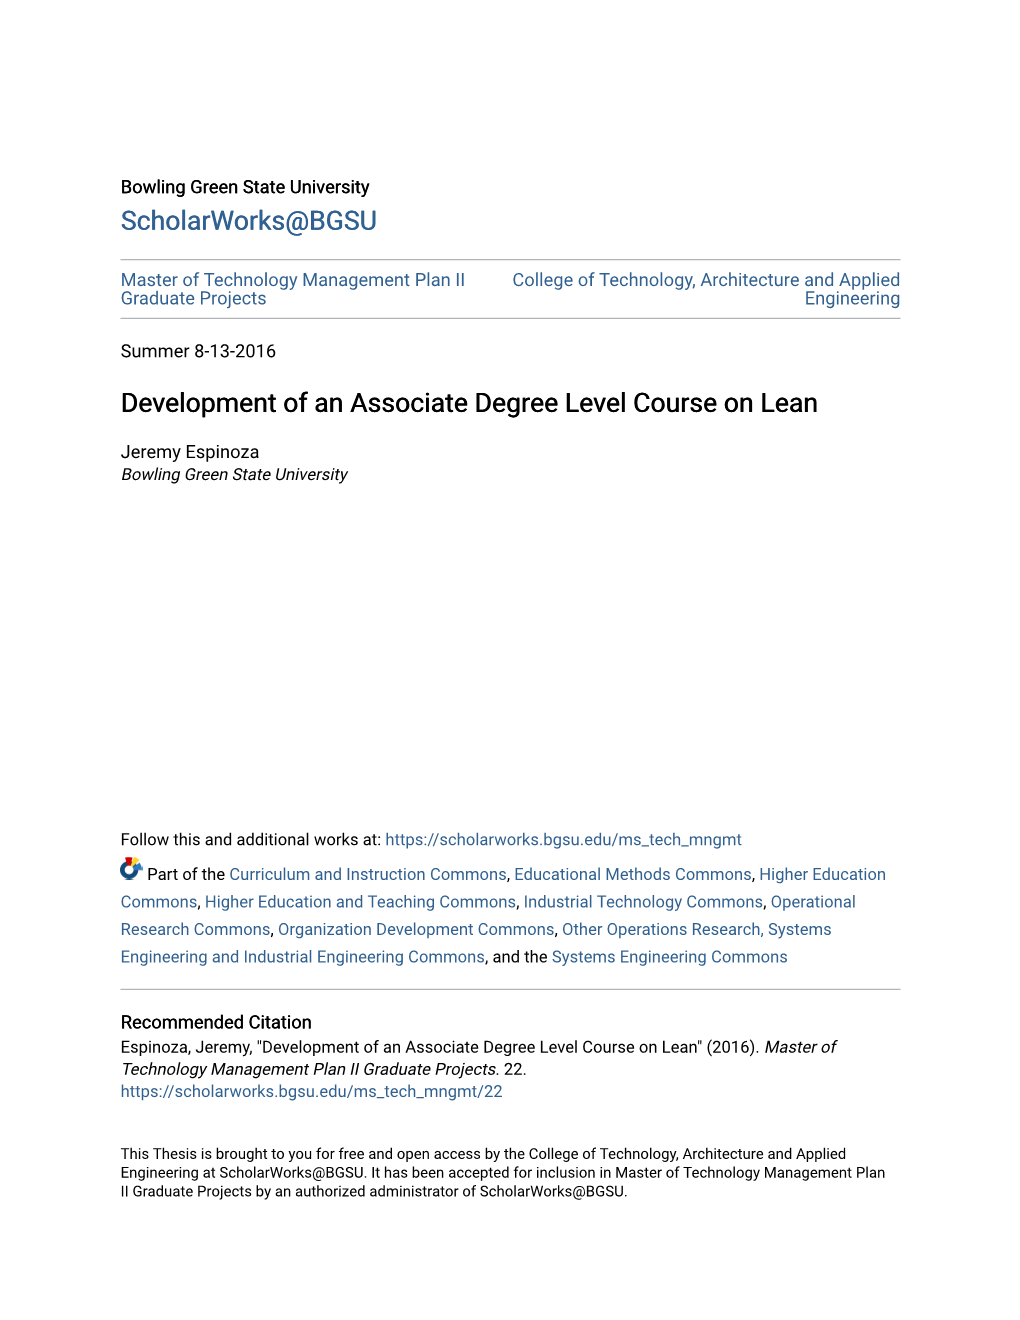 Development of an Associate Degree Level Course on Lean